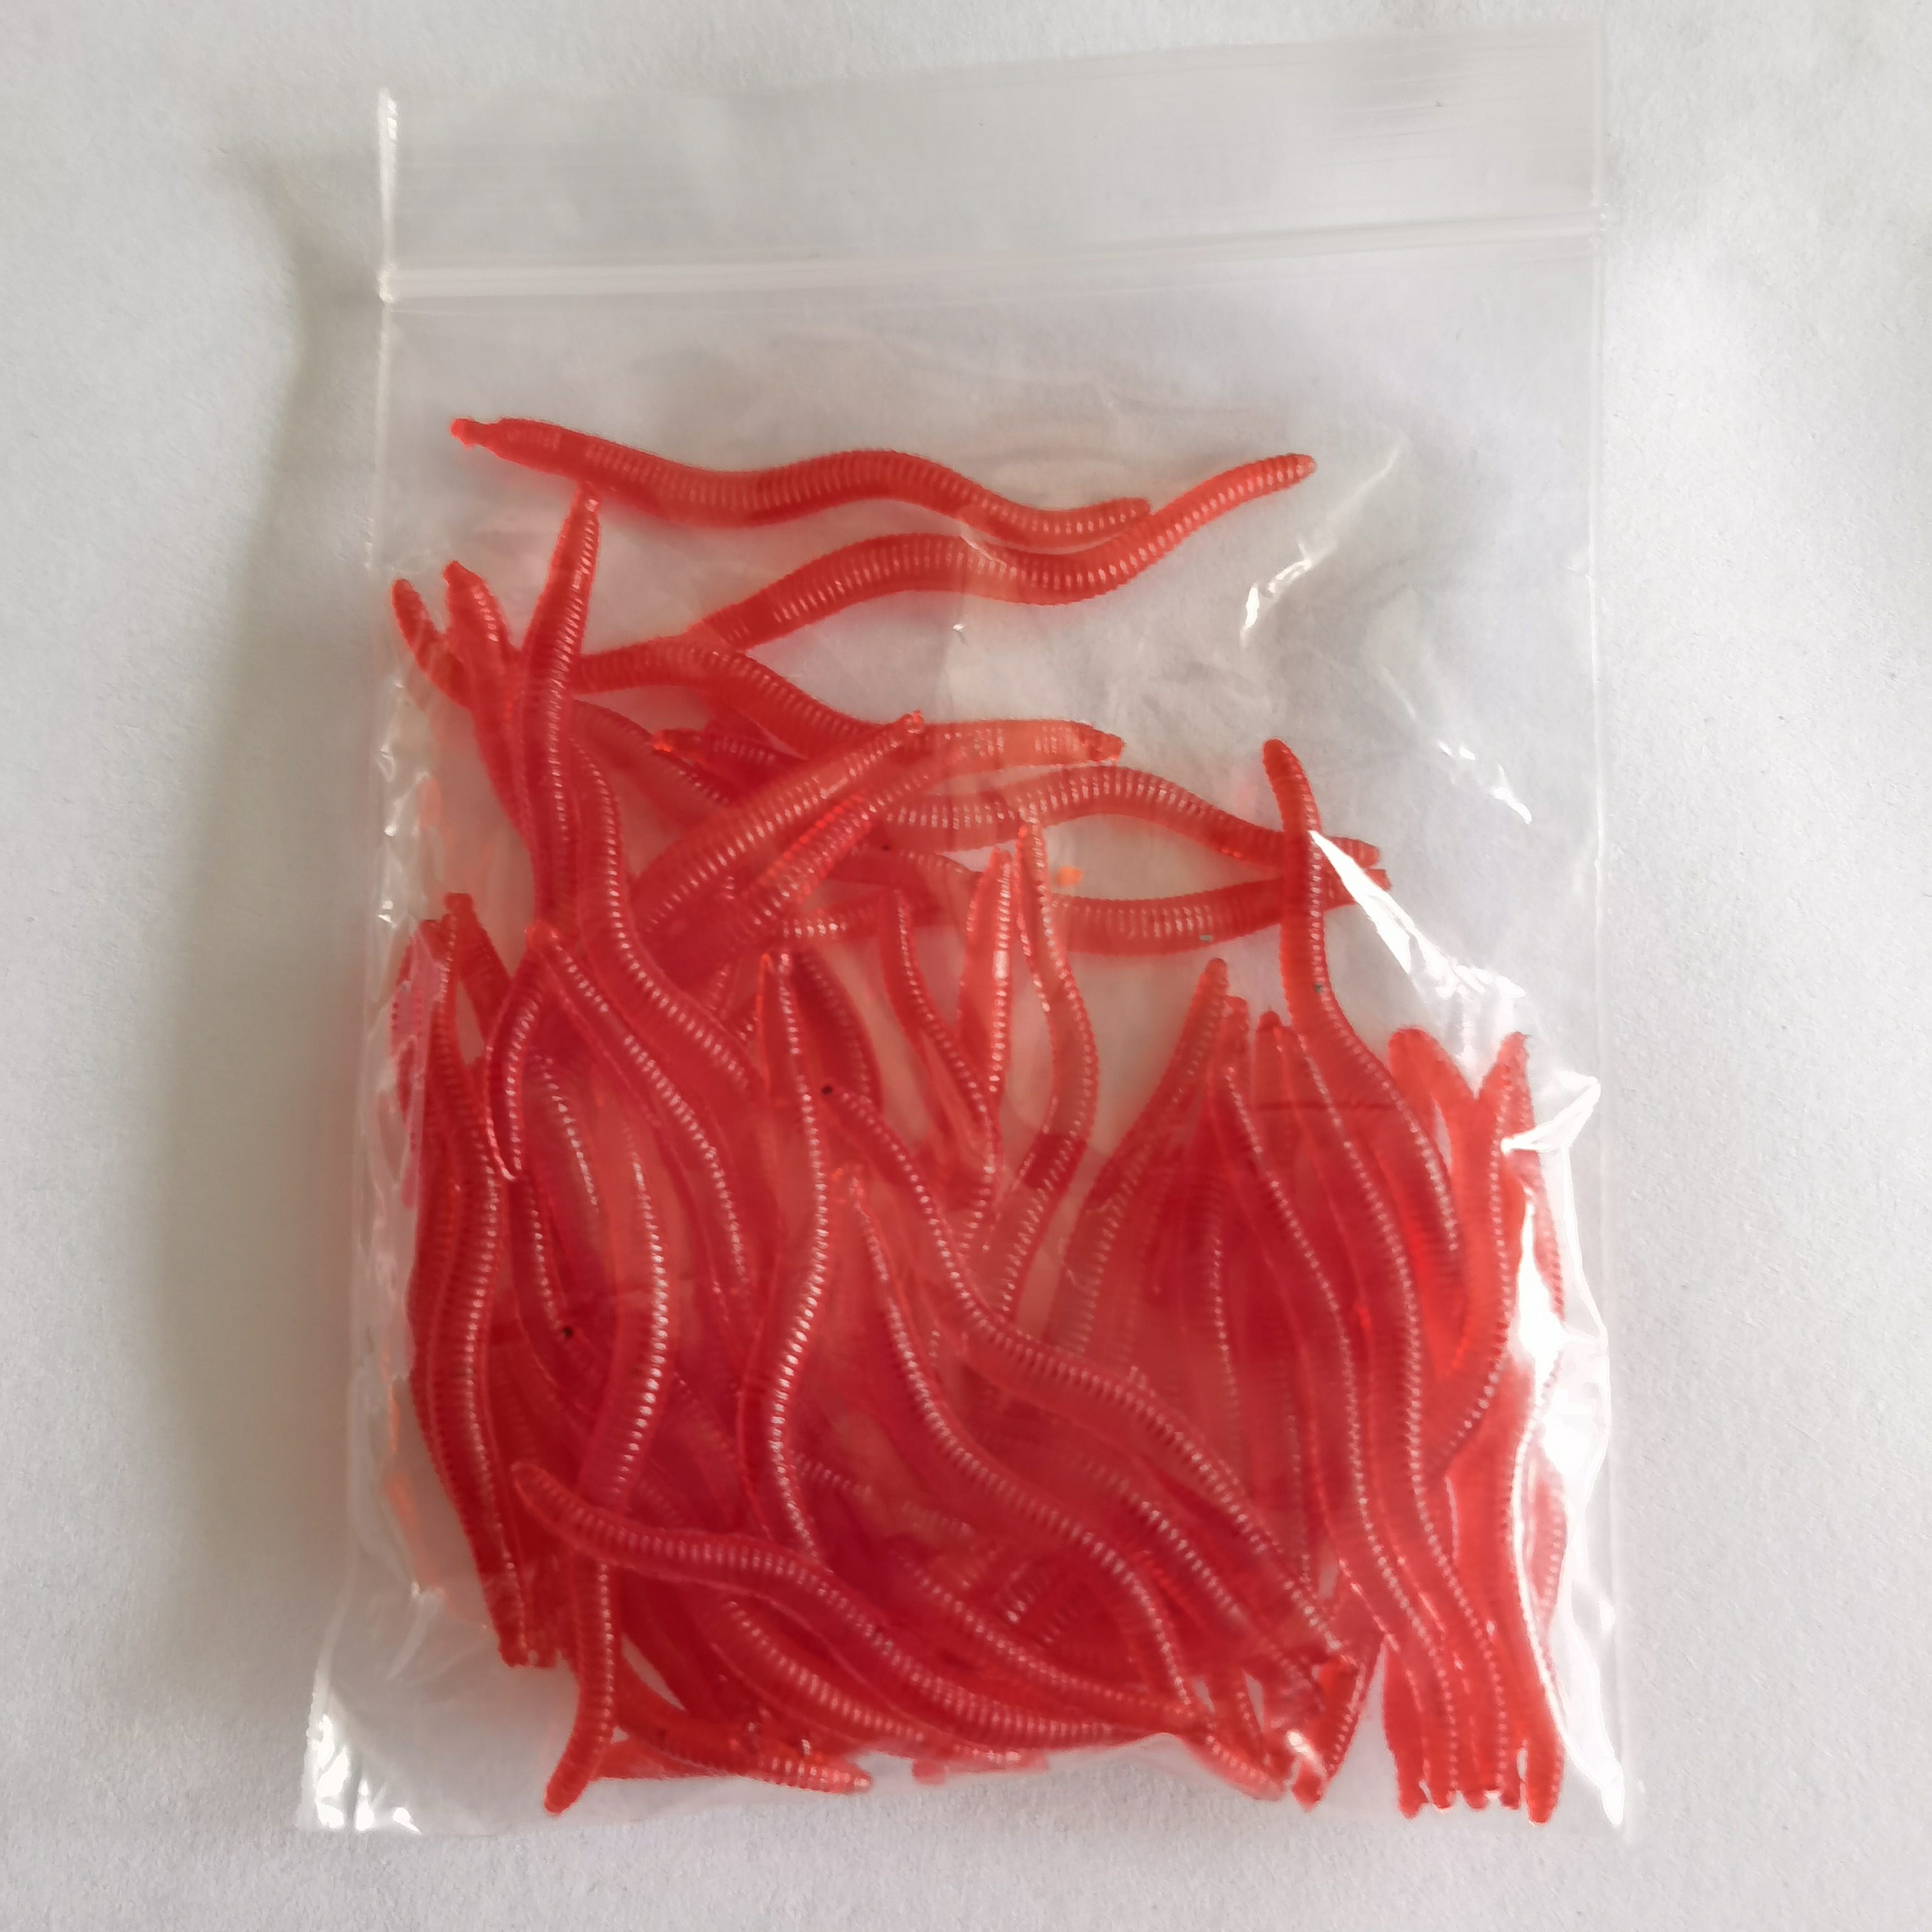 Earthworm Soft Bait Fishing Dark Red Maggot Plastic Lure - Temu